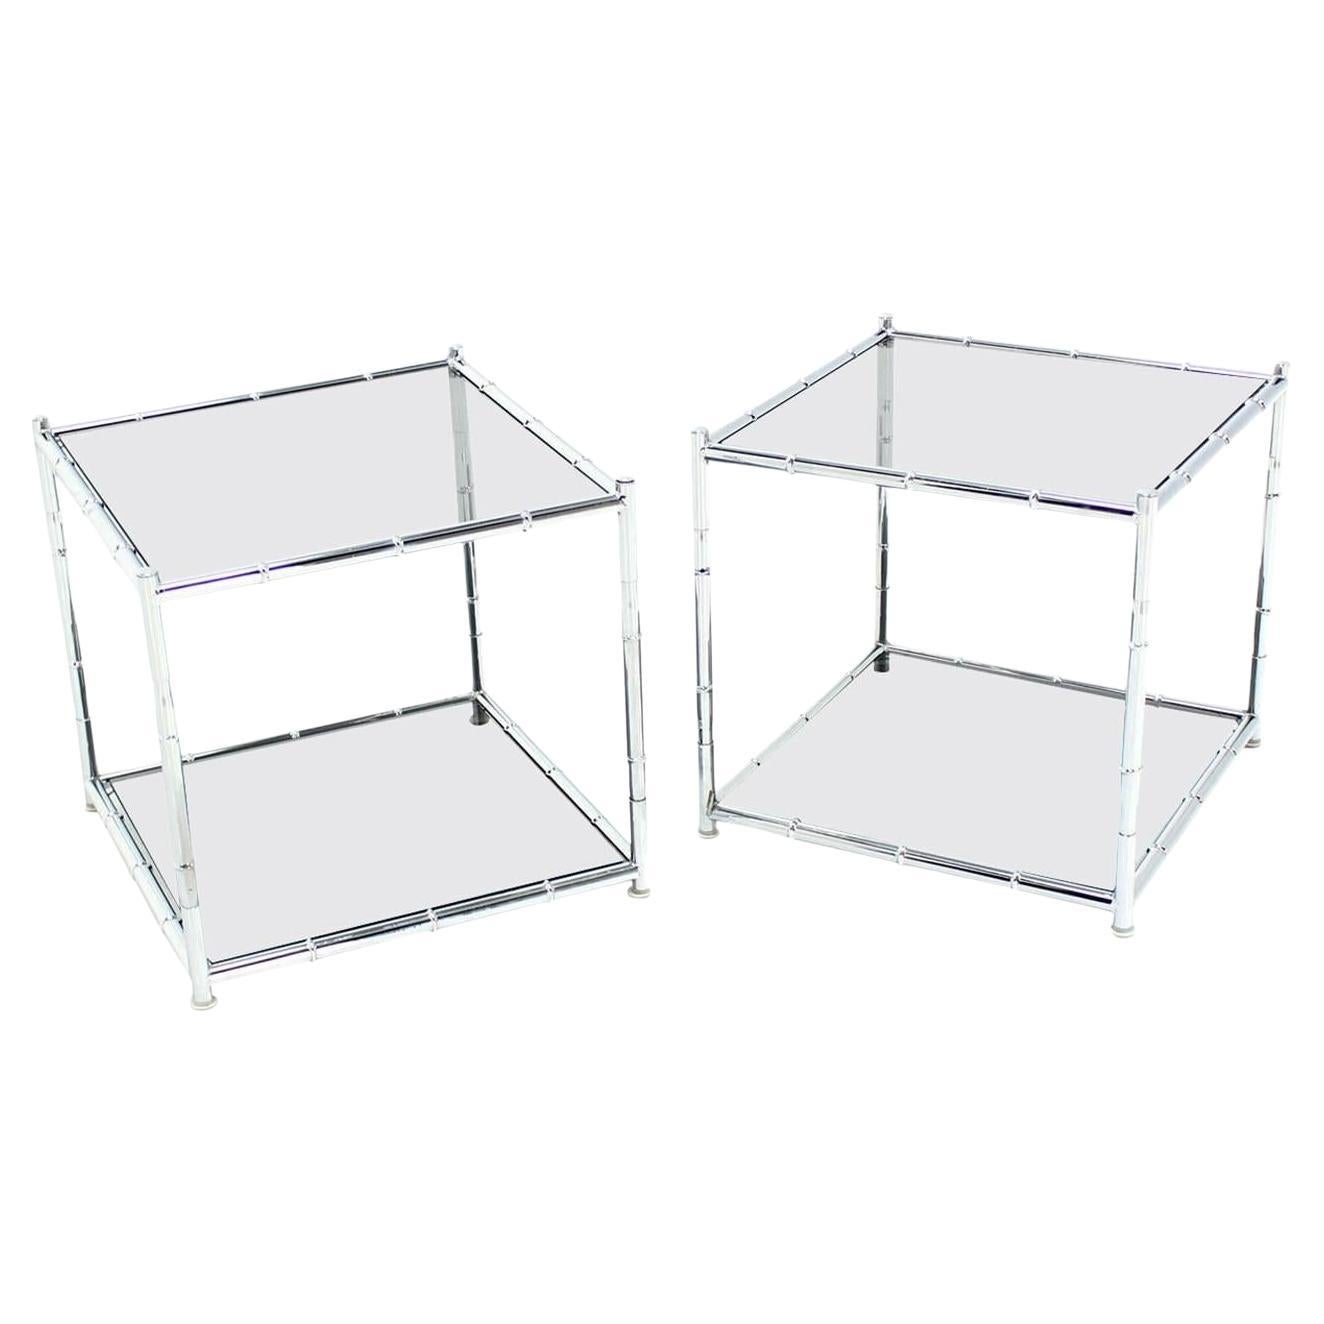 Pair of Cube Form Chrom Faux Bambus Frame End Tables Rauchglas Top MINT!